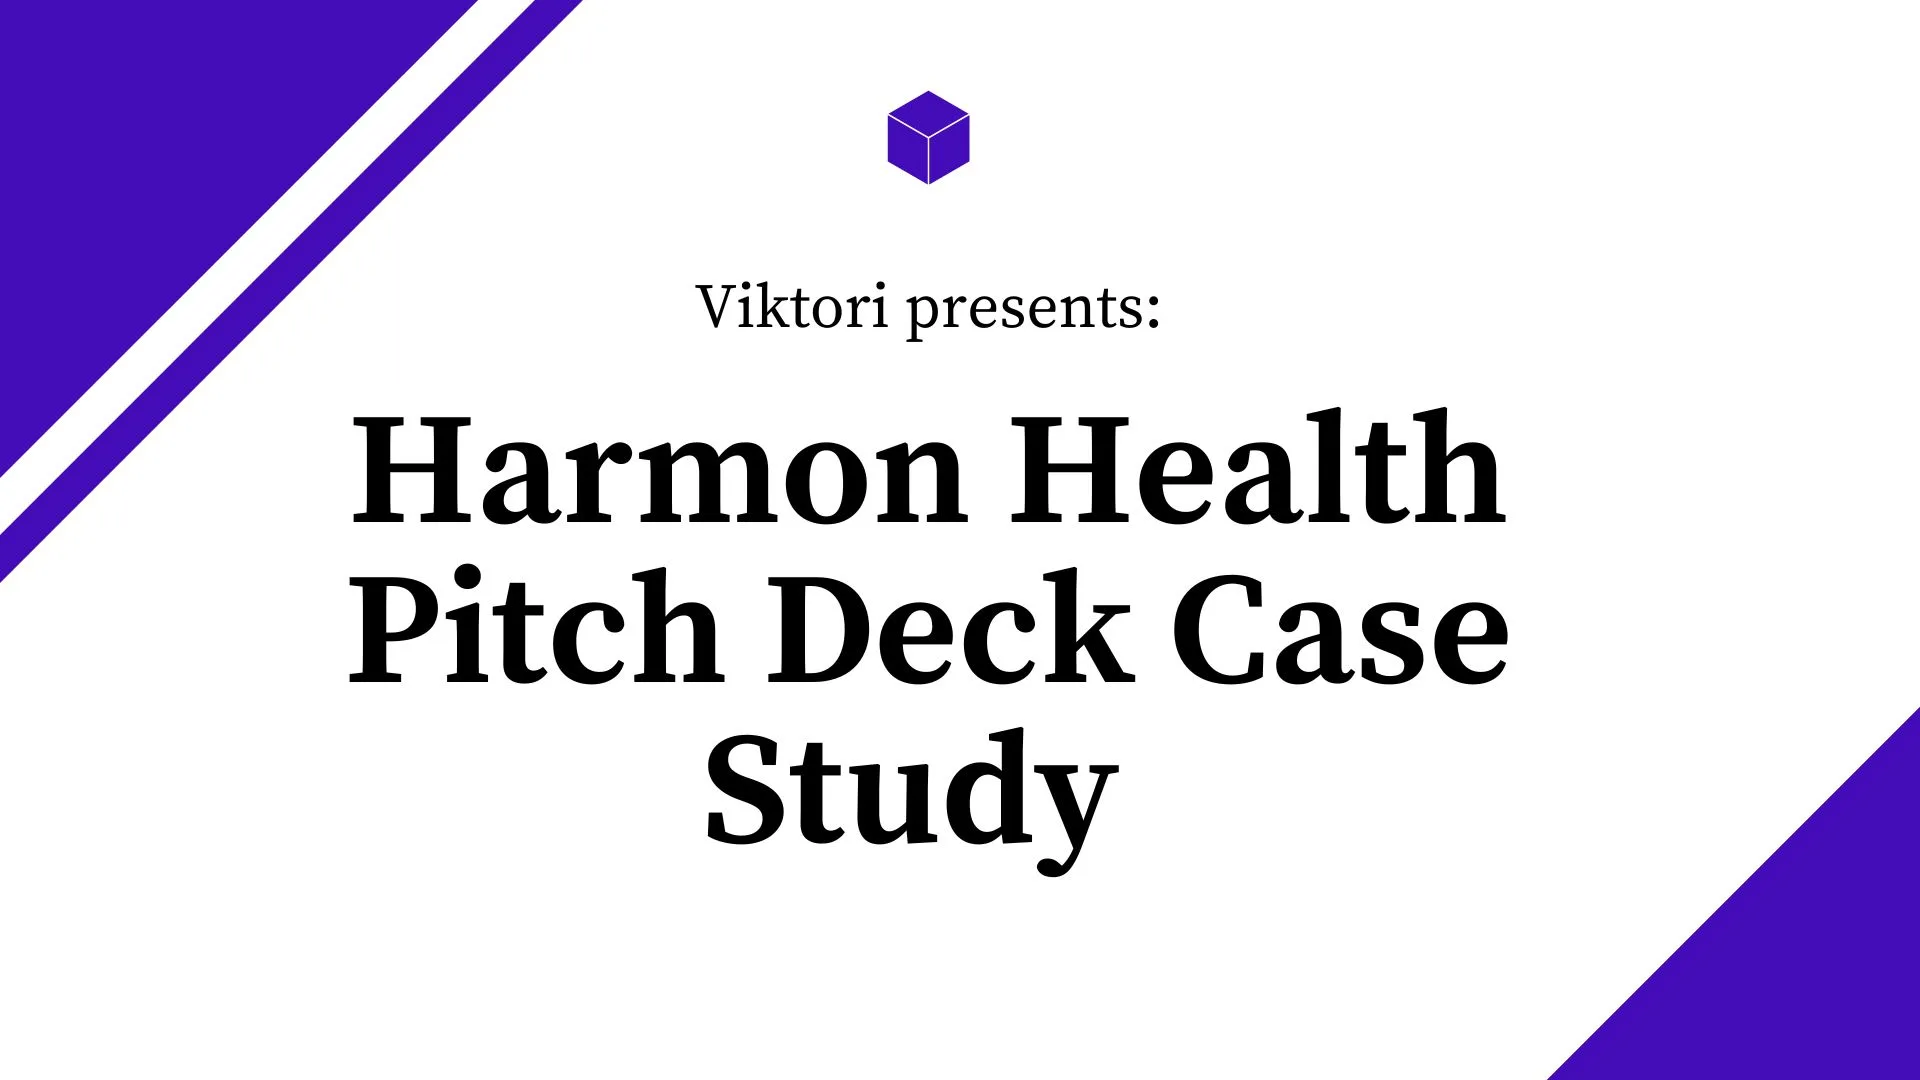 harmon health pitch deck case study